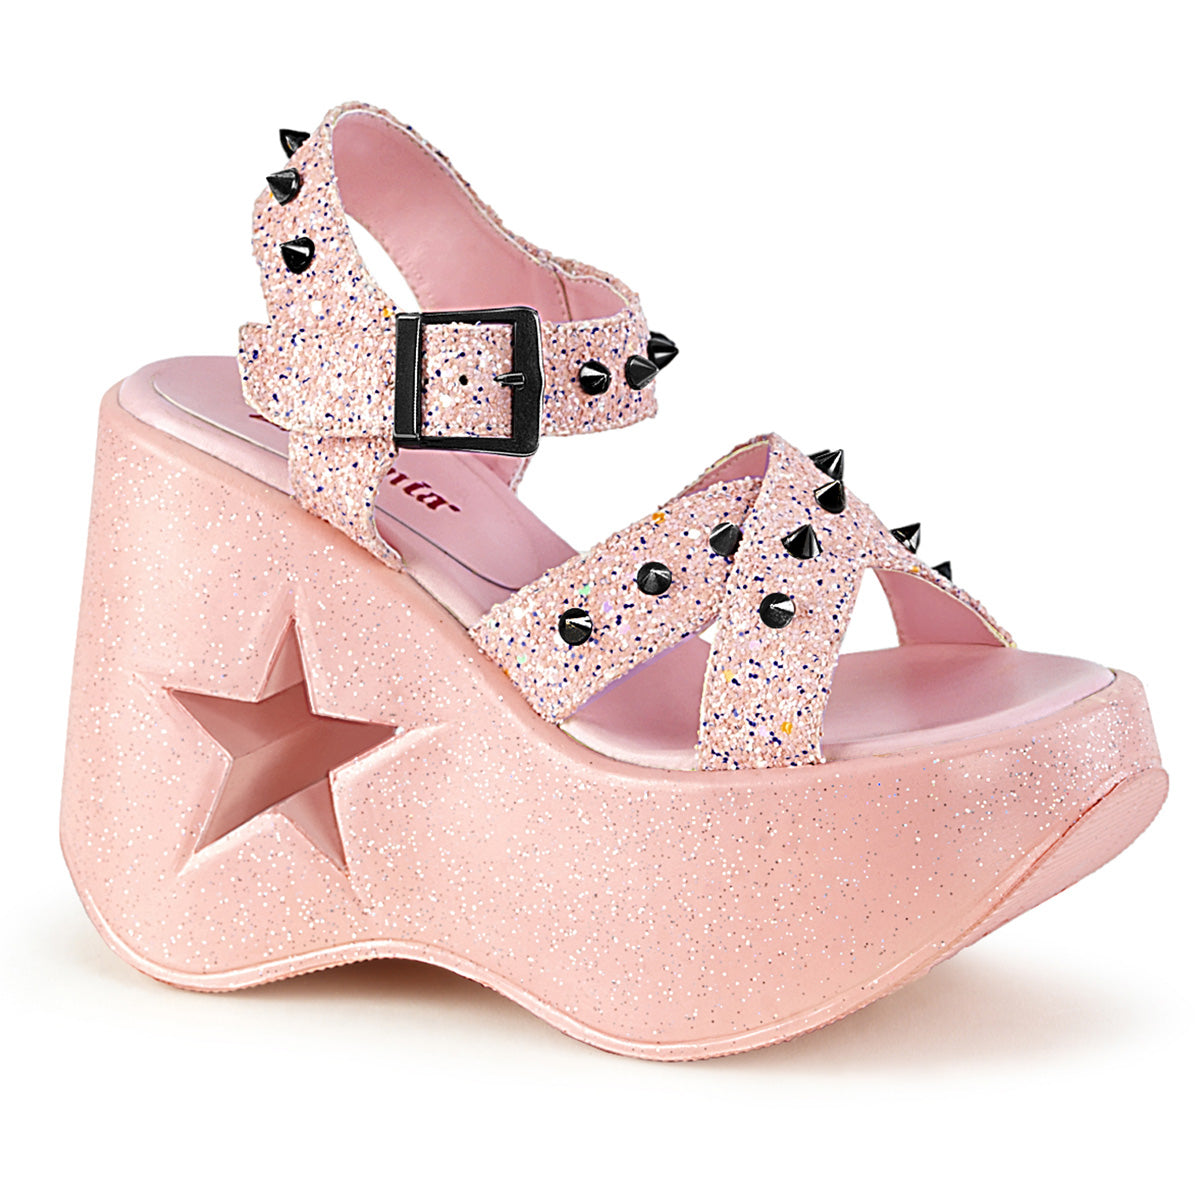 DYNAMITE-02 Alternative Footwear Demonia Women's Sandals Baby Pink Glitter